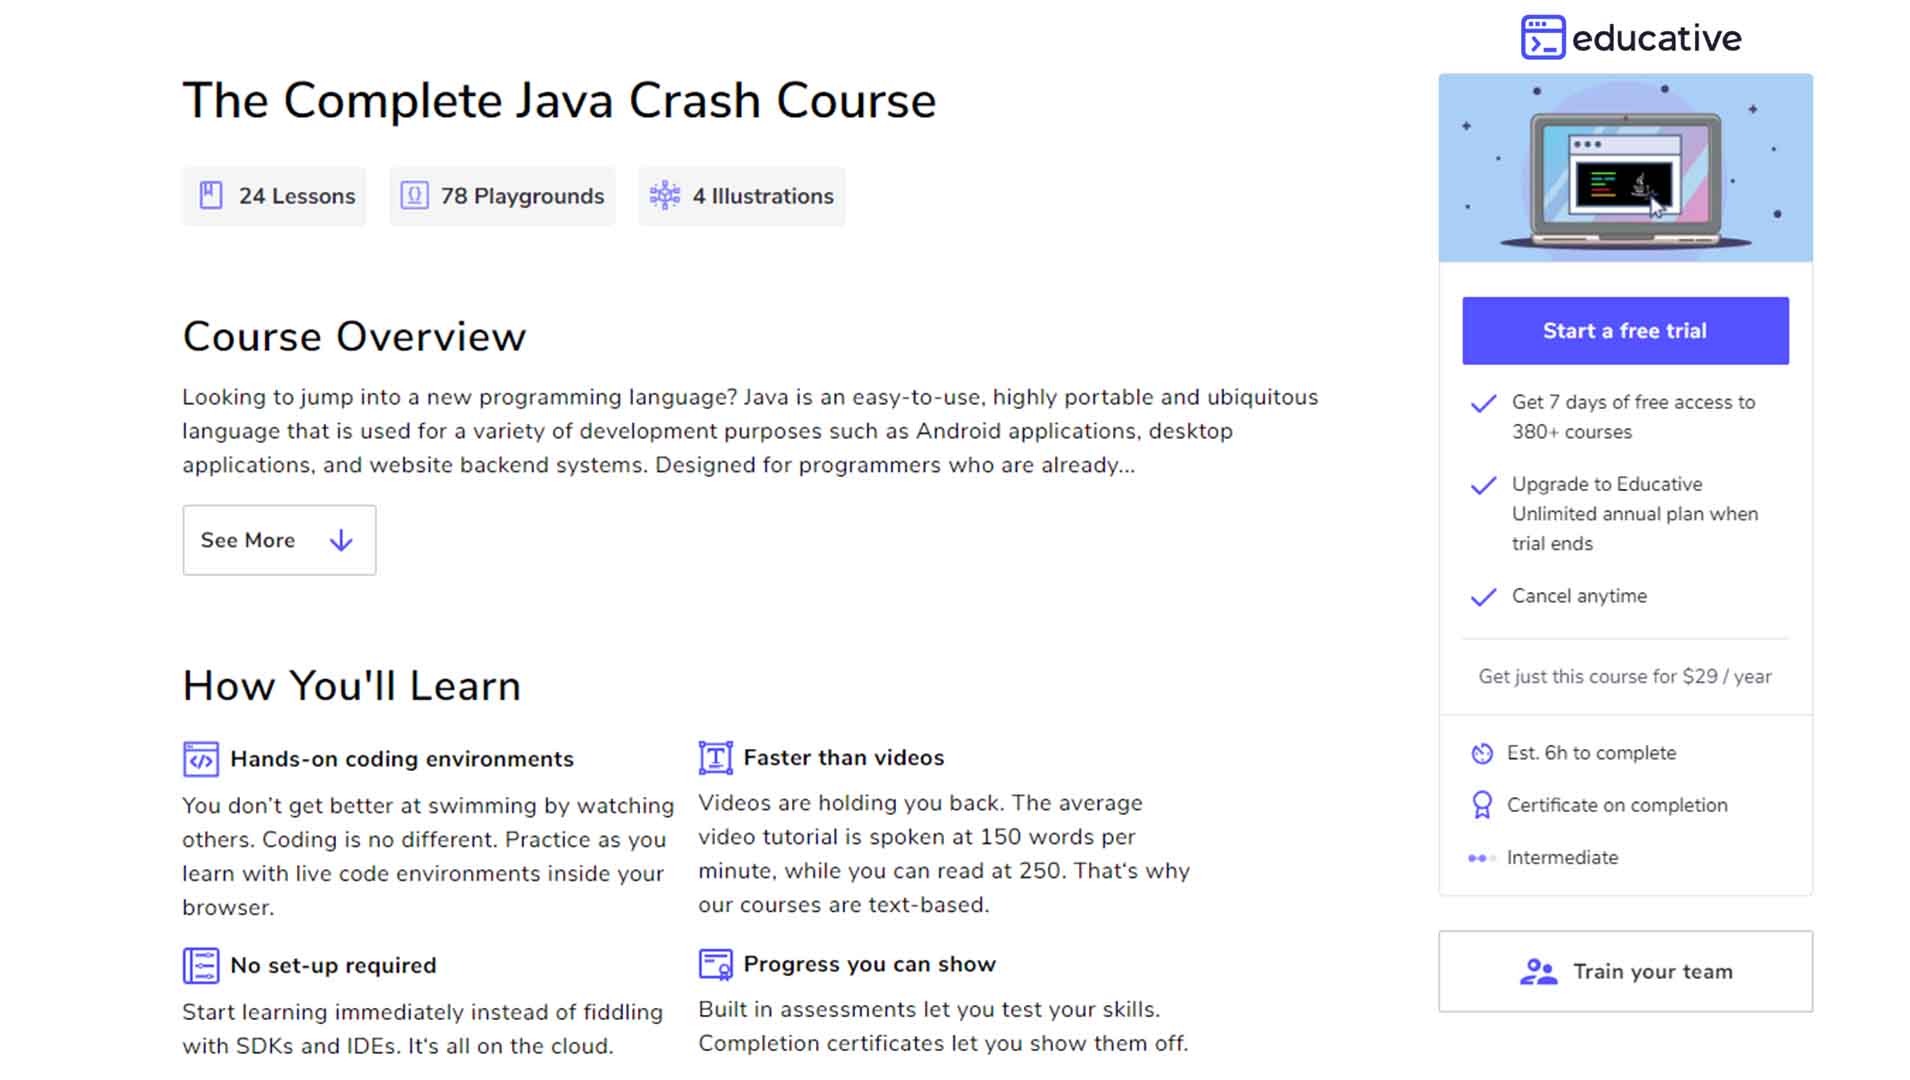 The Complete Java Crash Course